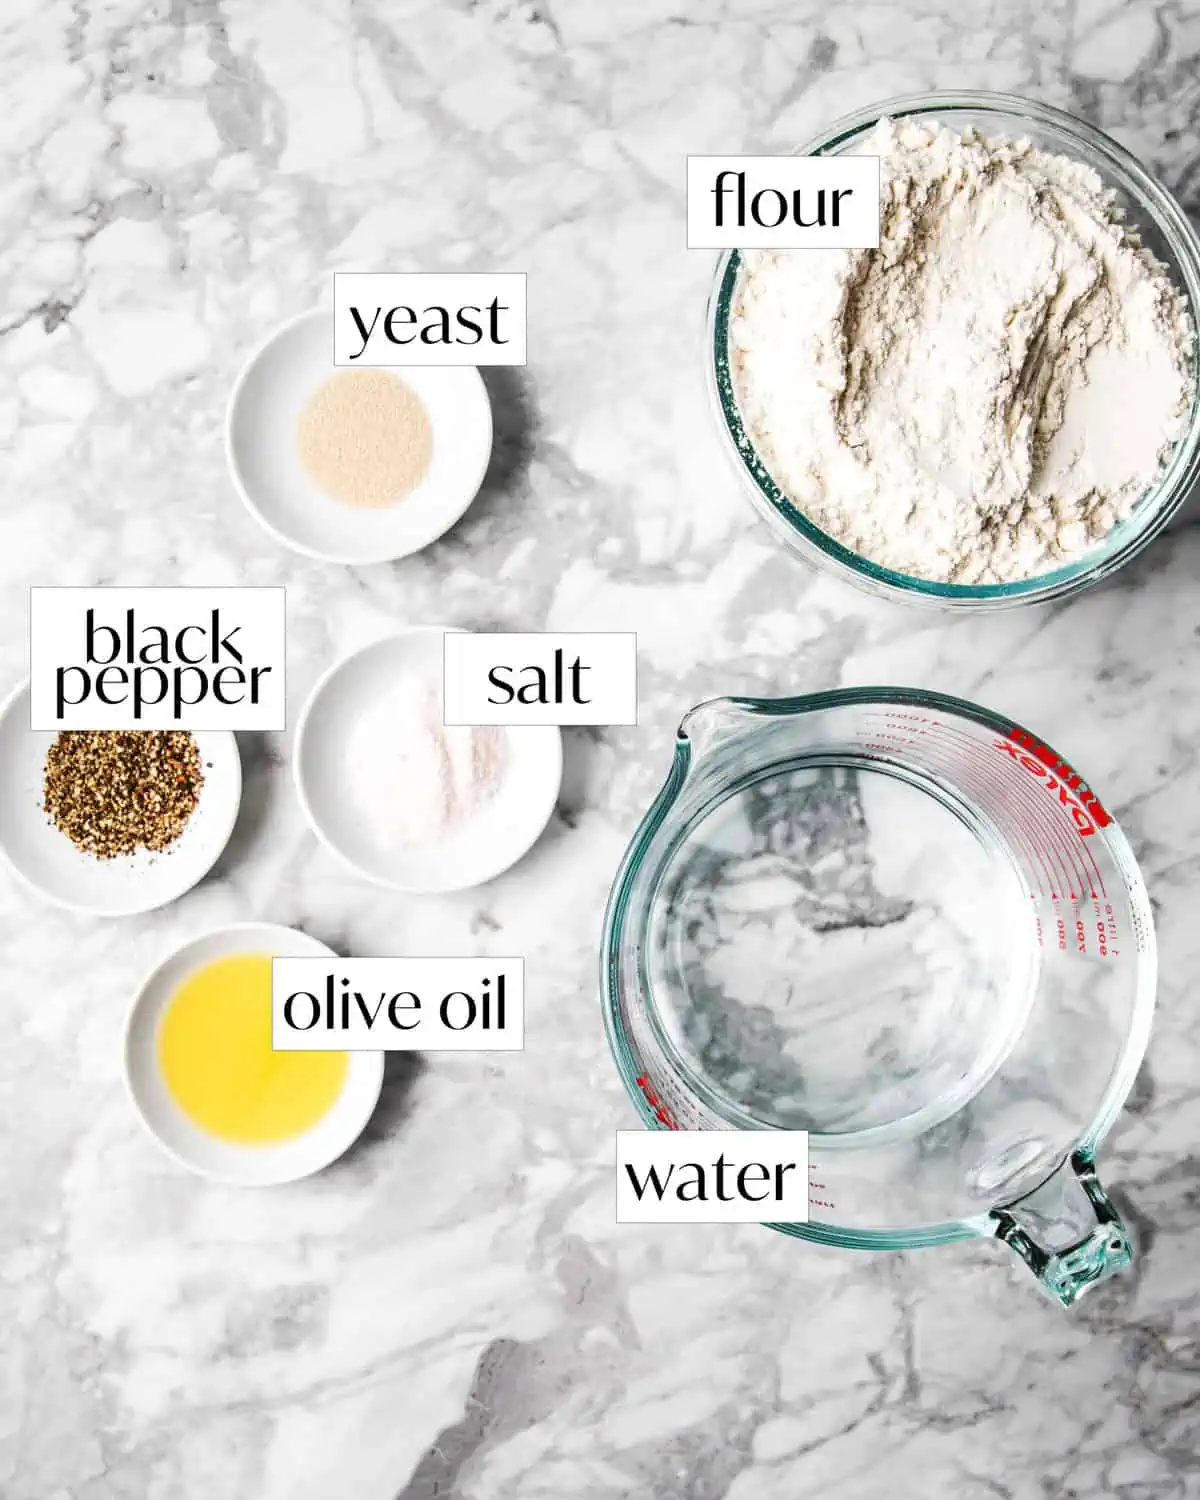 flour, yeast, water, salt, black pepper, and yeast are ingredients.